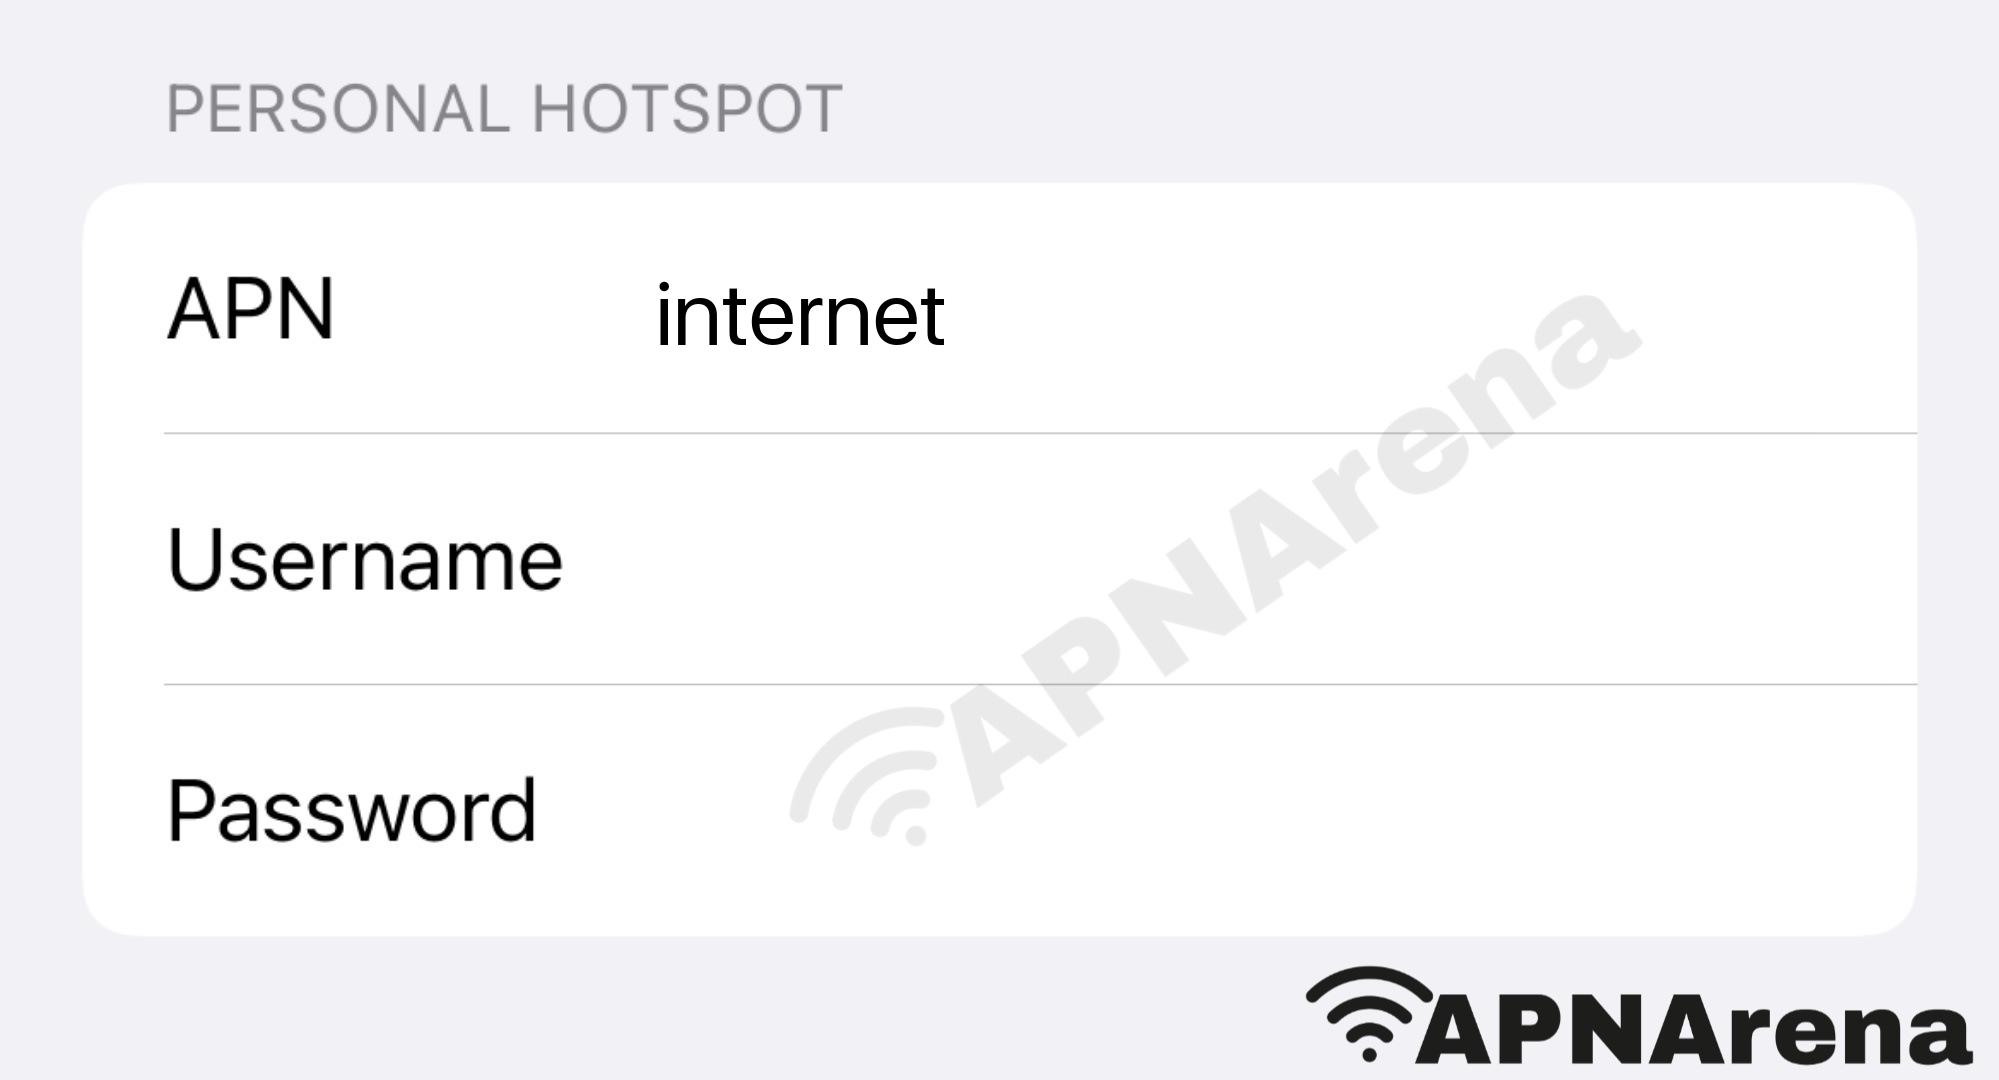 m:tel Montenegro Personal Hotspot Settings for iPhone